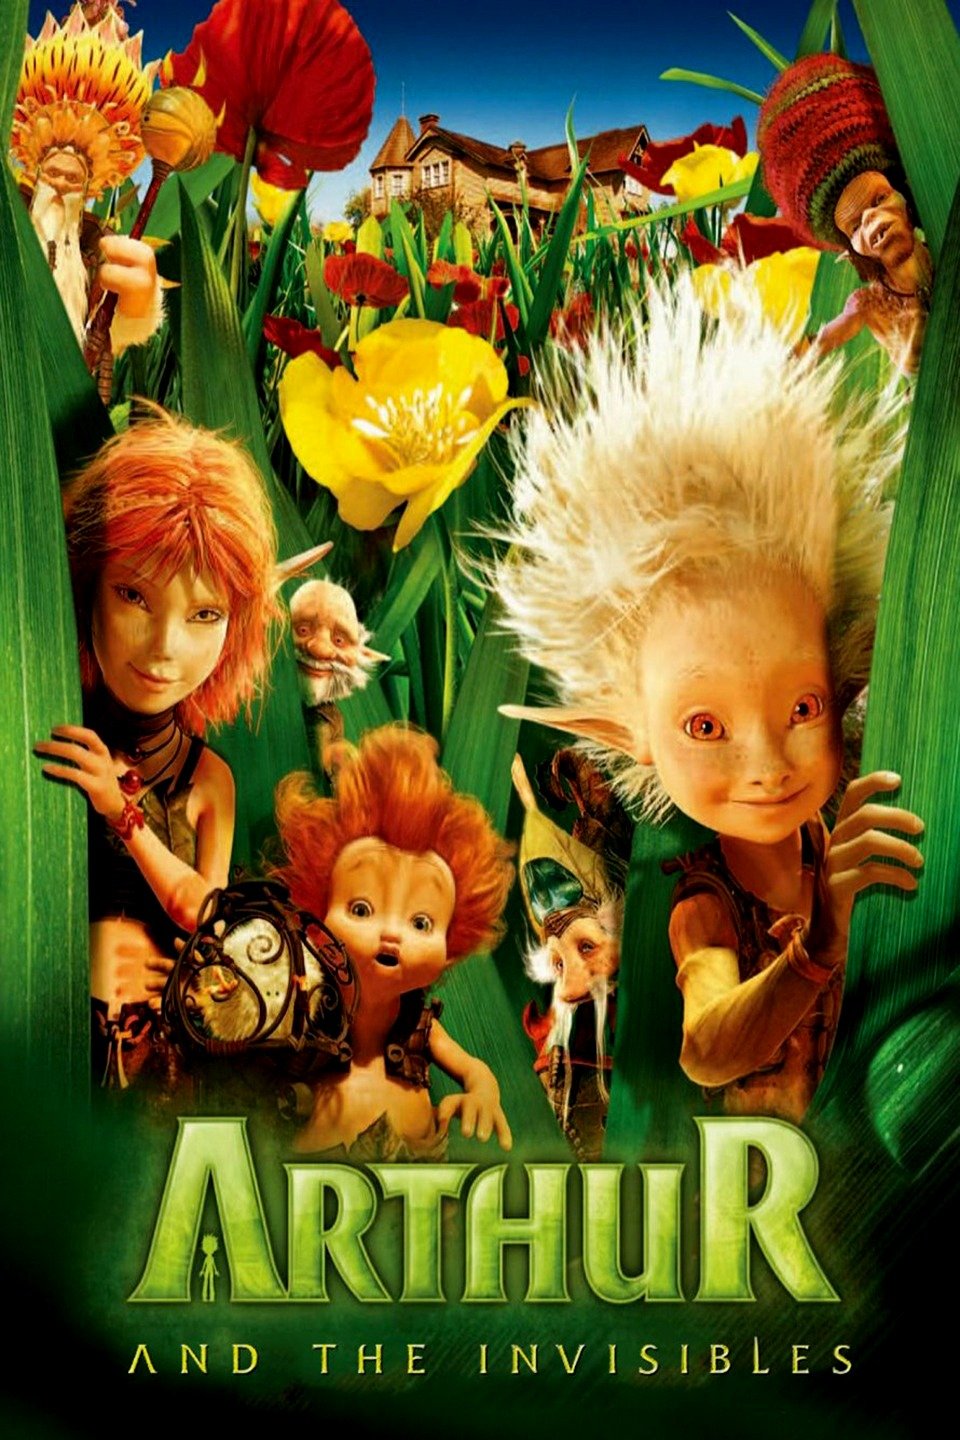 [MINI-HD] Arthur and the Invisibles (2006) อาร์เธอร์ ทูตจิ๋วเจาะขุมทรัพย์มหัศจรรย์ ภาค 1 [720p] [พากย์ไทย 5.1 + อังกฤษ 5.1] [บรรยายไทย + อังกฤษ] [เสียงไทย + ซับไทย] [ONE2UP]